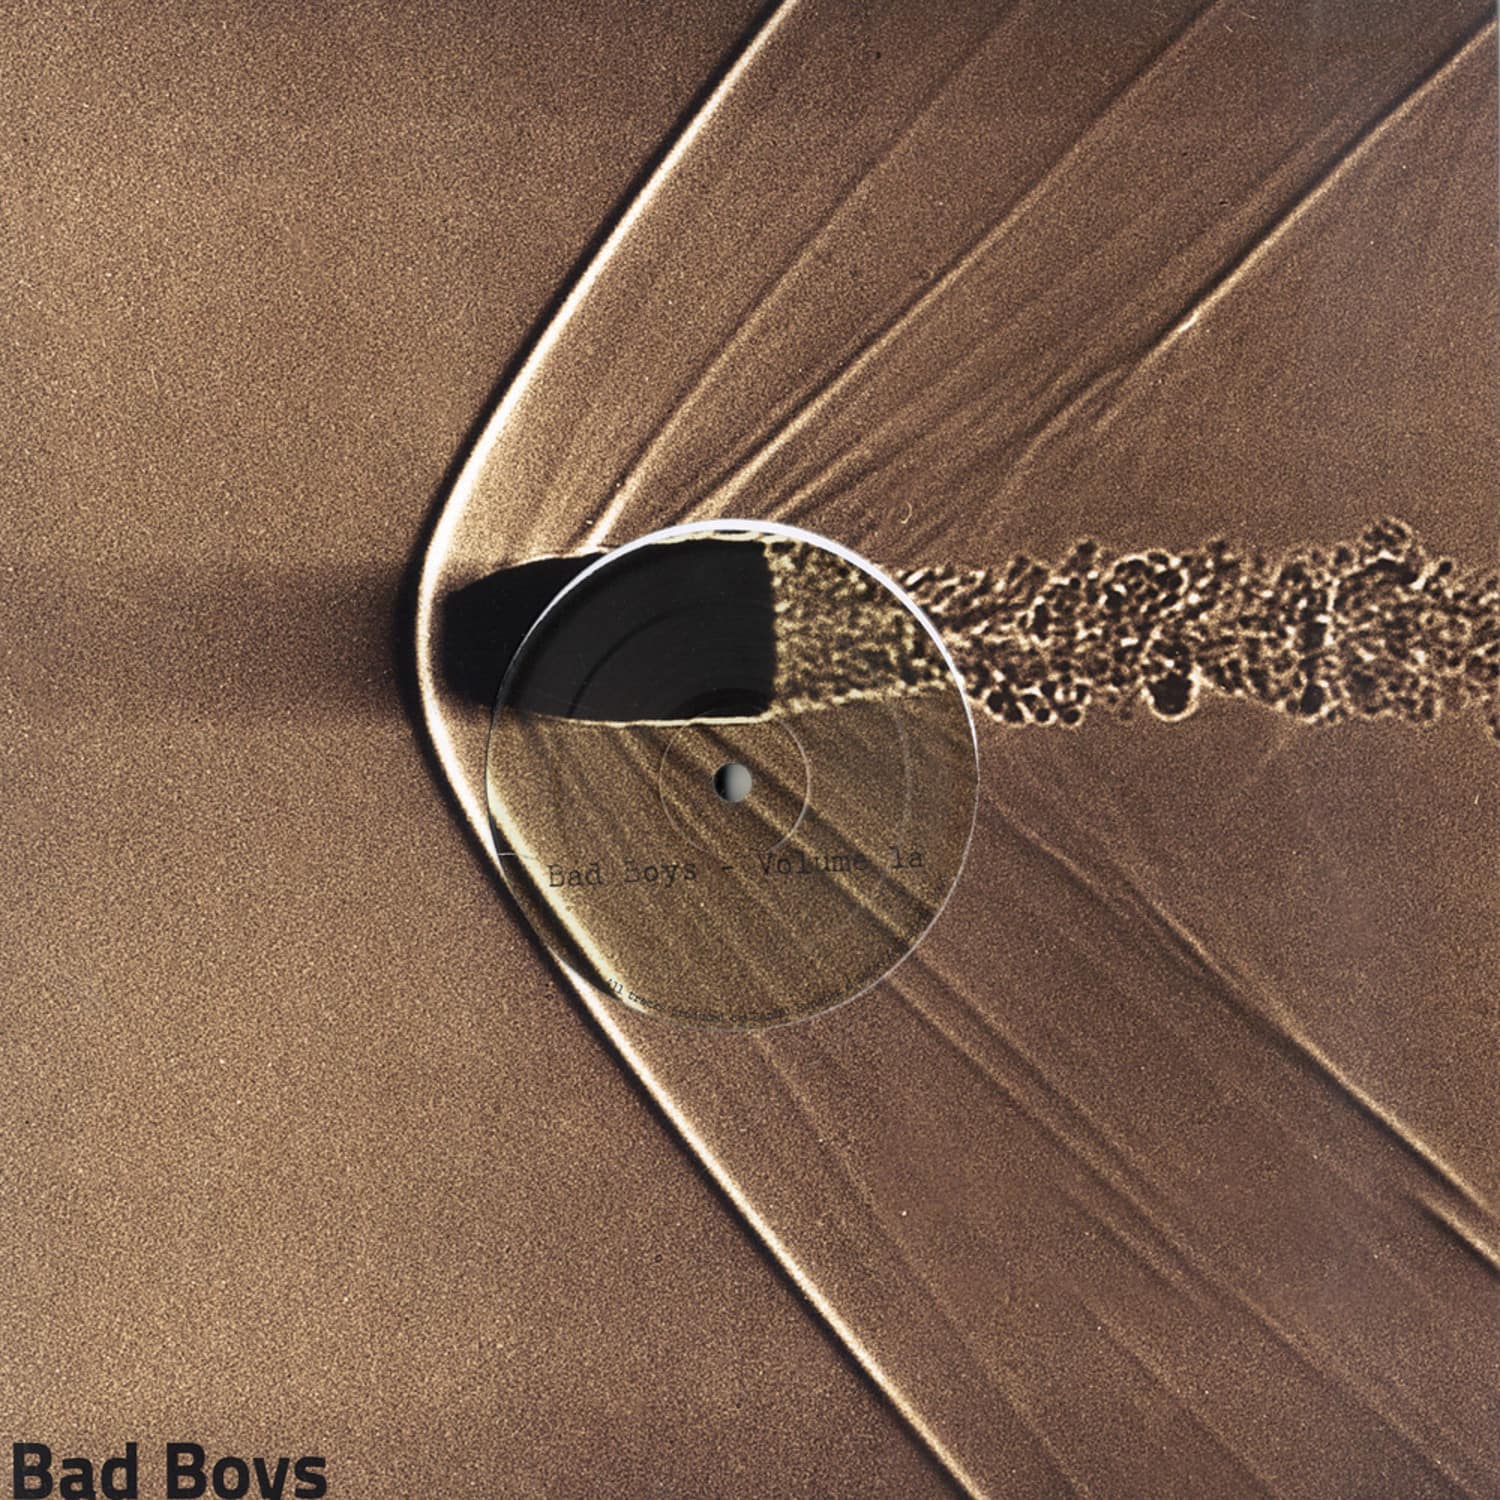 Bad Boys - VOL.1